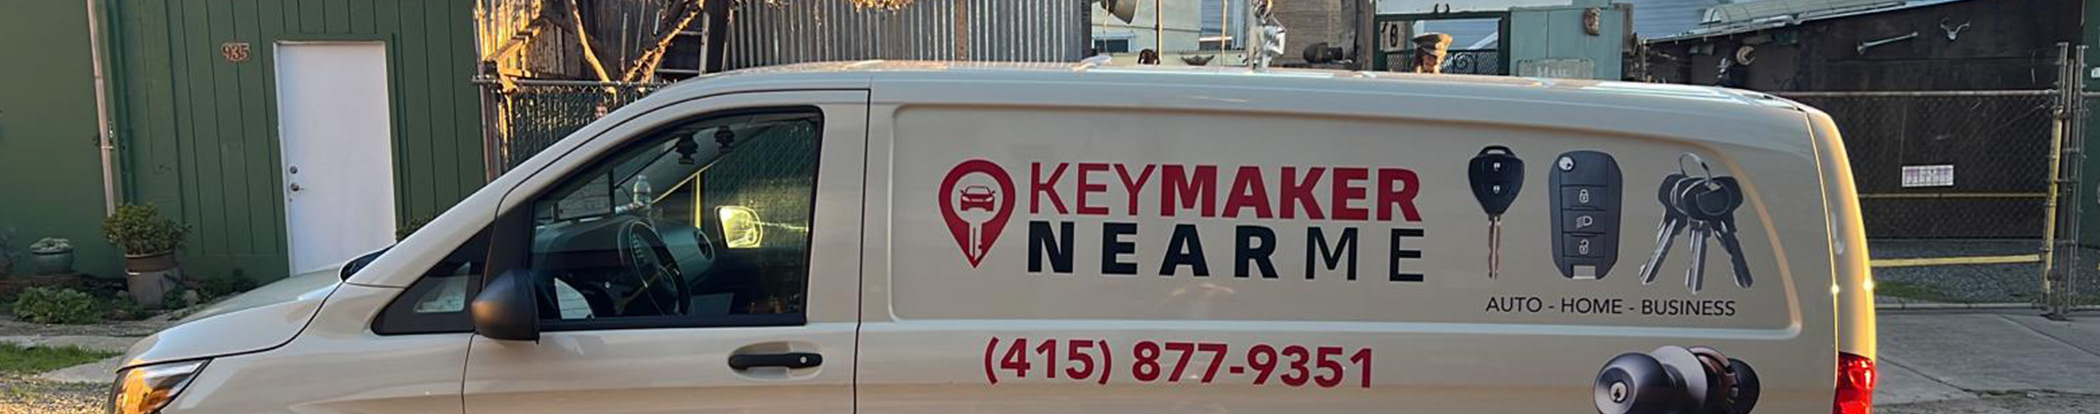 KeyMaker NearMe's profile banner